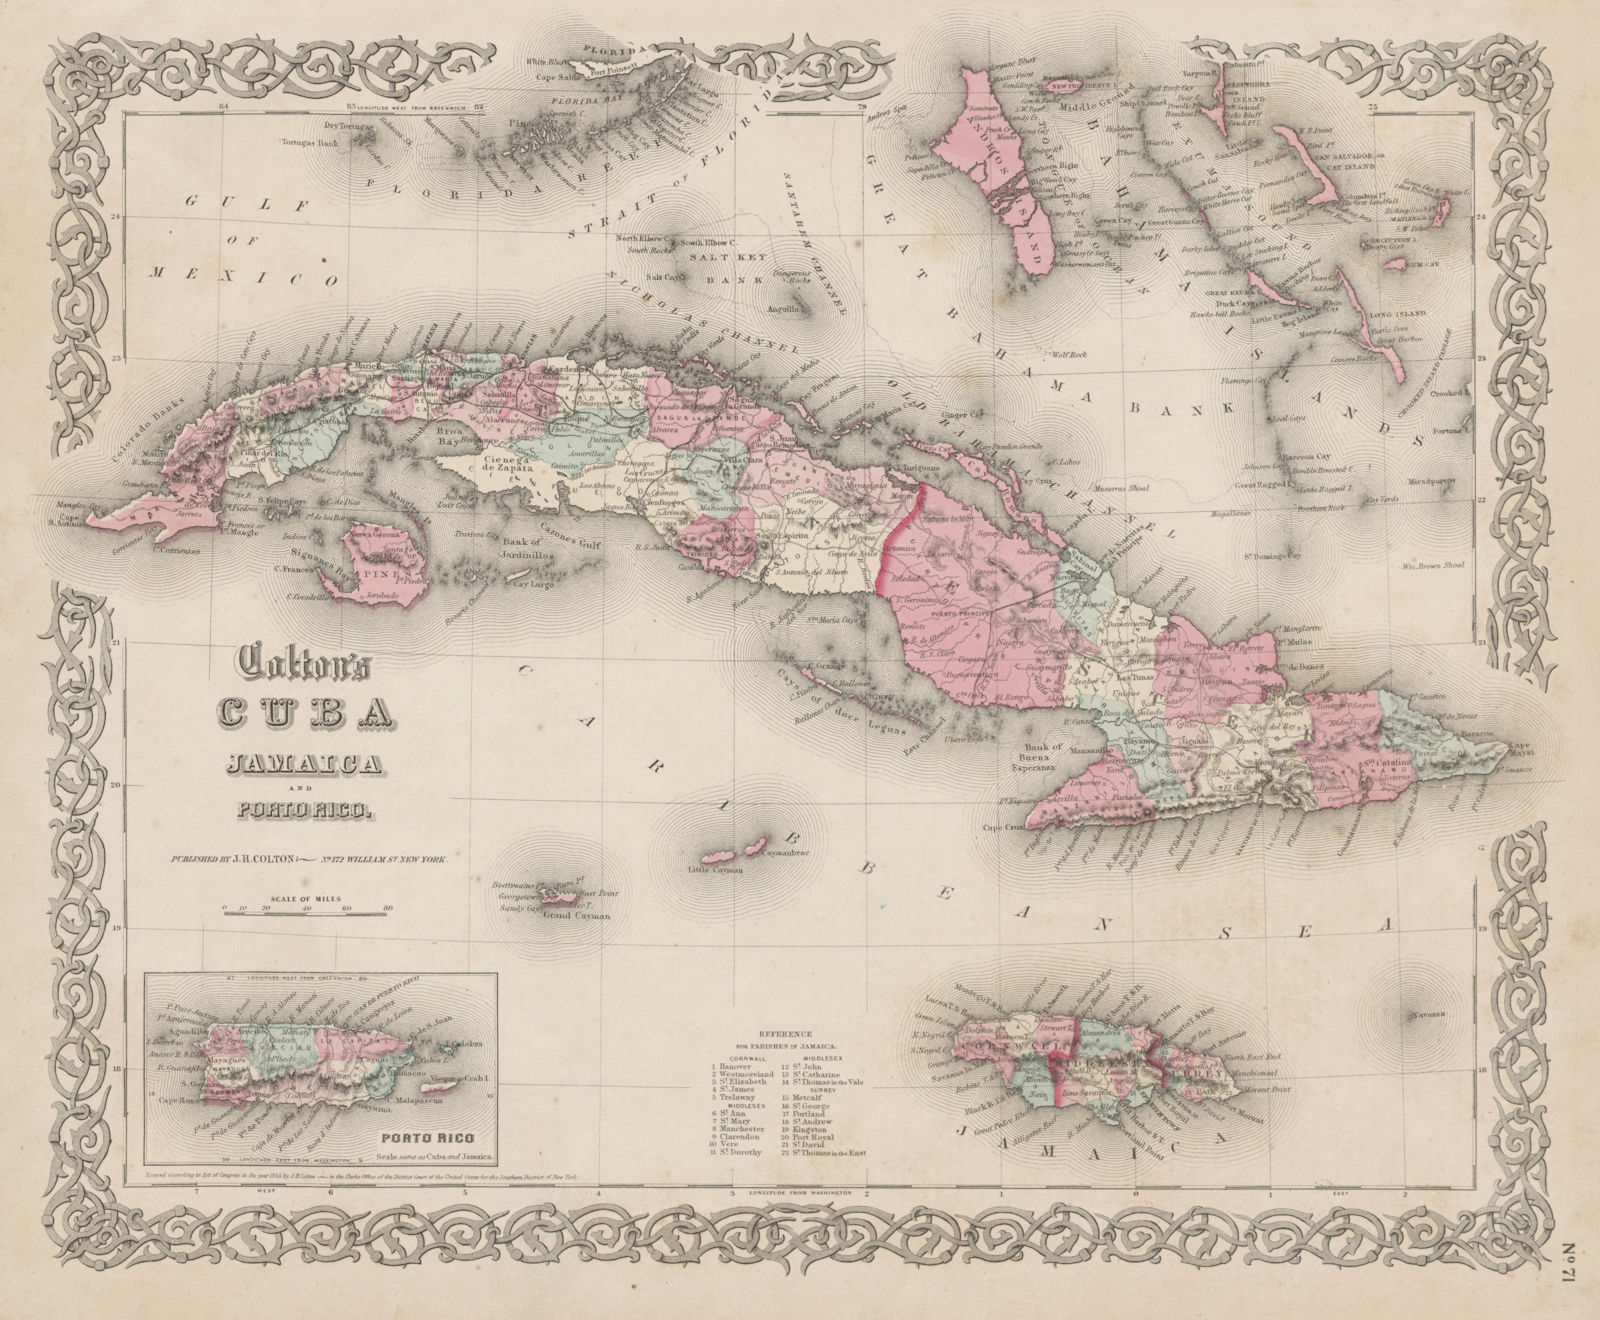 "Colton's Cuba, Jamaica and Porto Rico". Puerto Rico. Bahamas 1863 old map